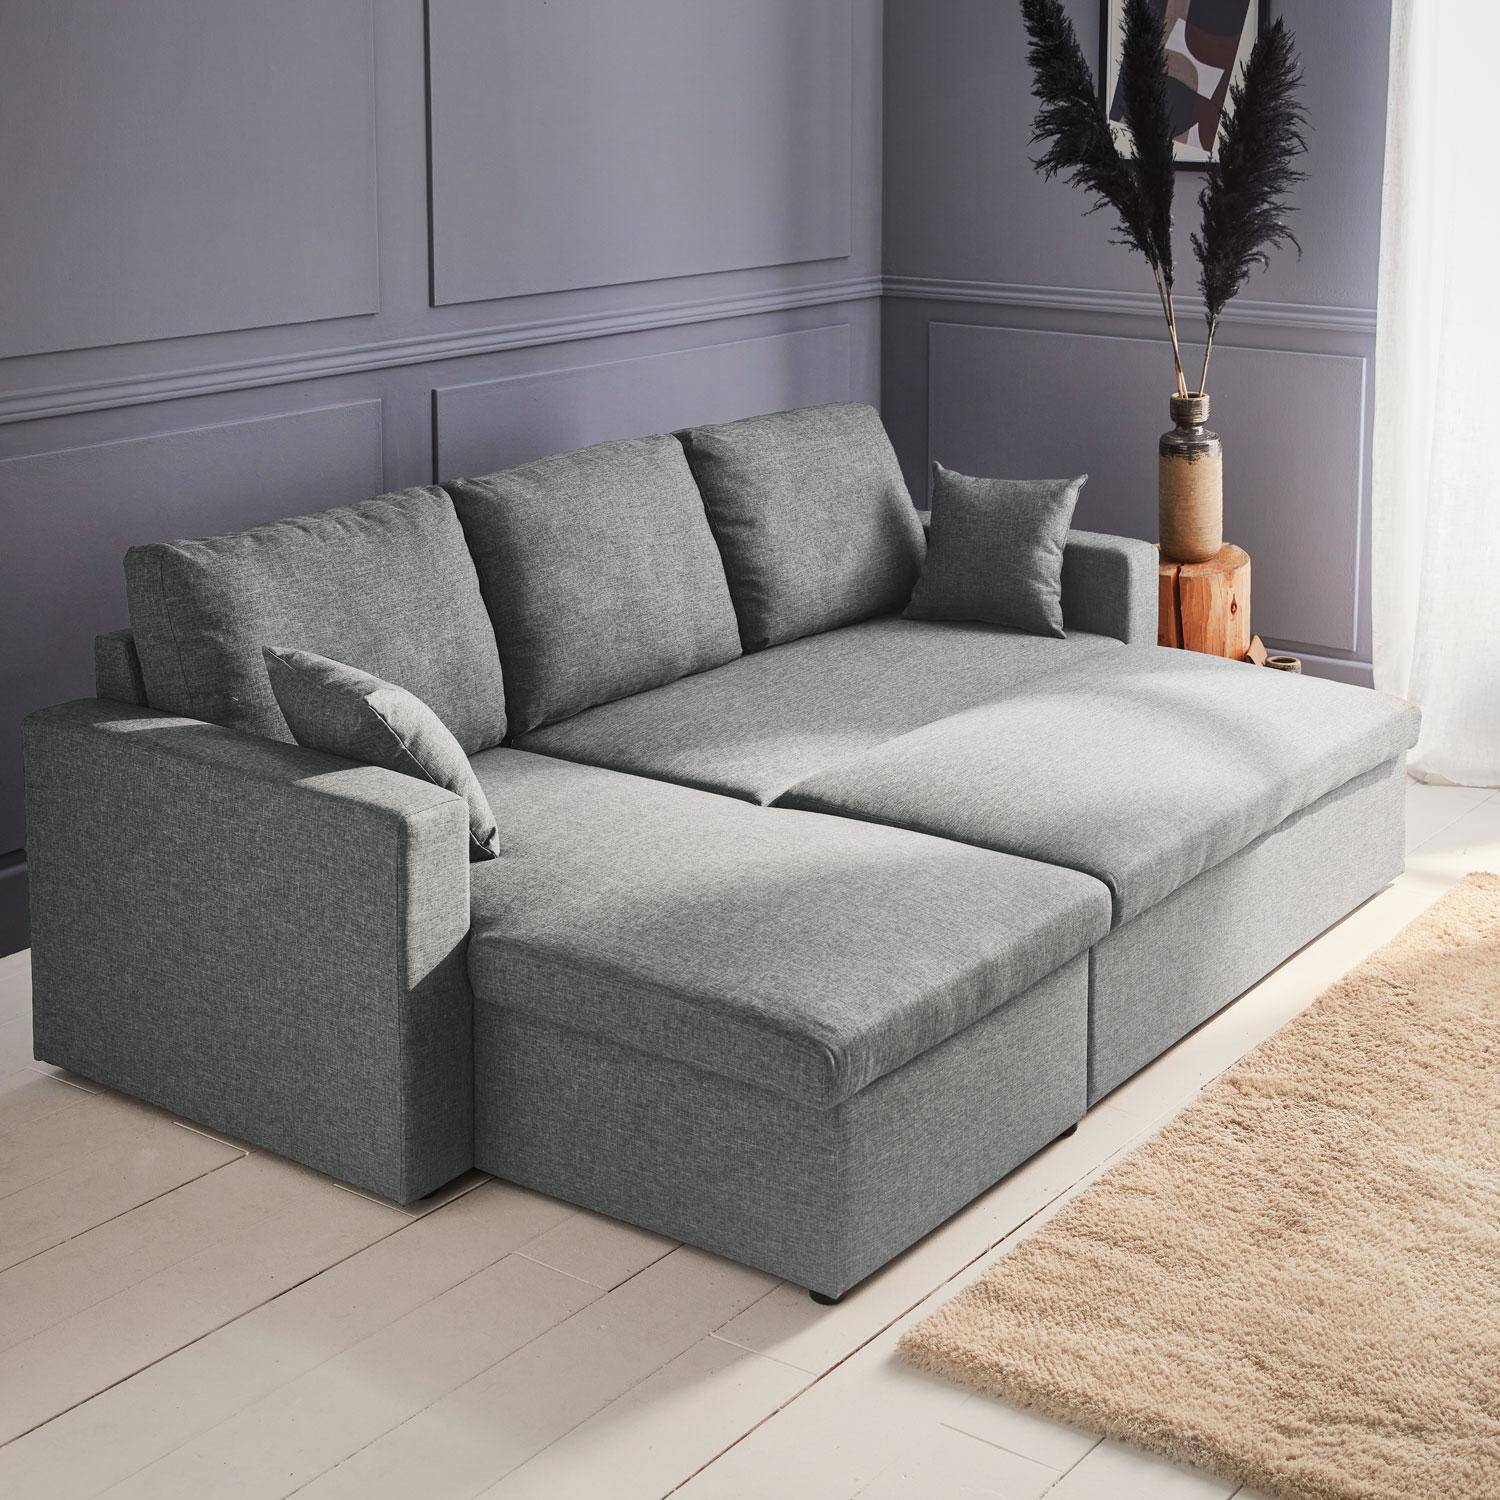 3-seater reversible light grey corner sofa bed with storage box, L219xD81xH68cm, IDA Photo2